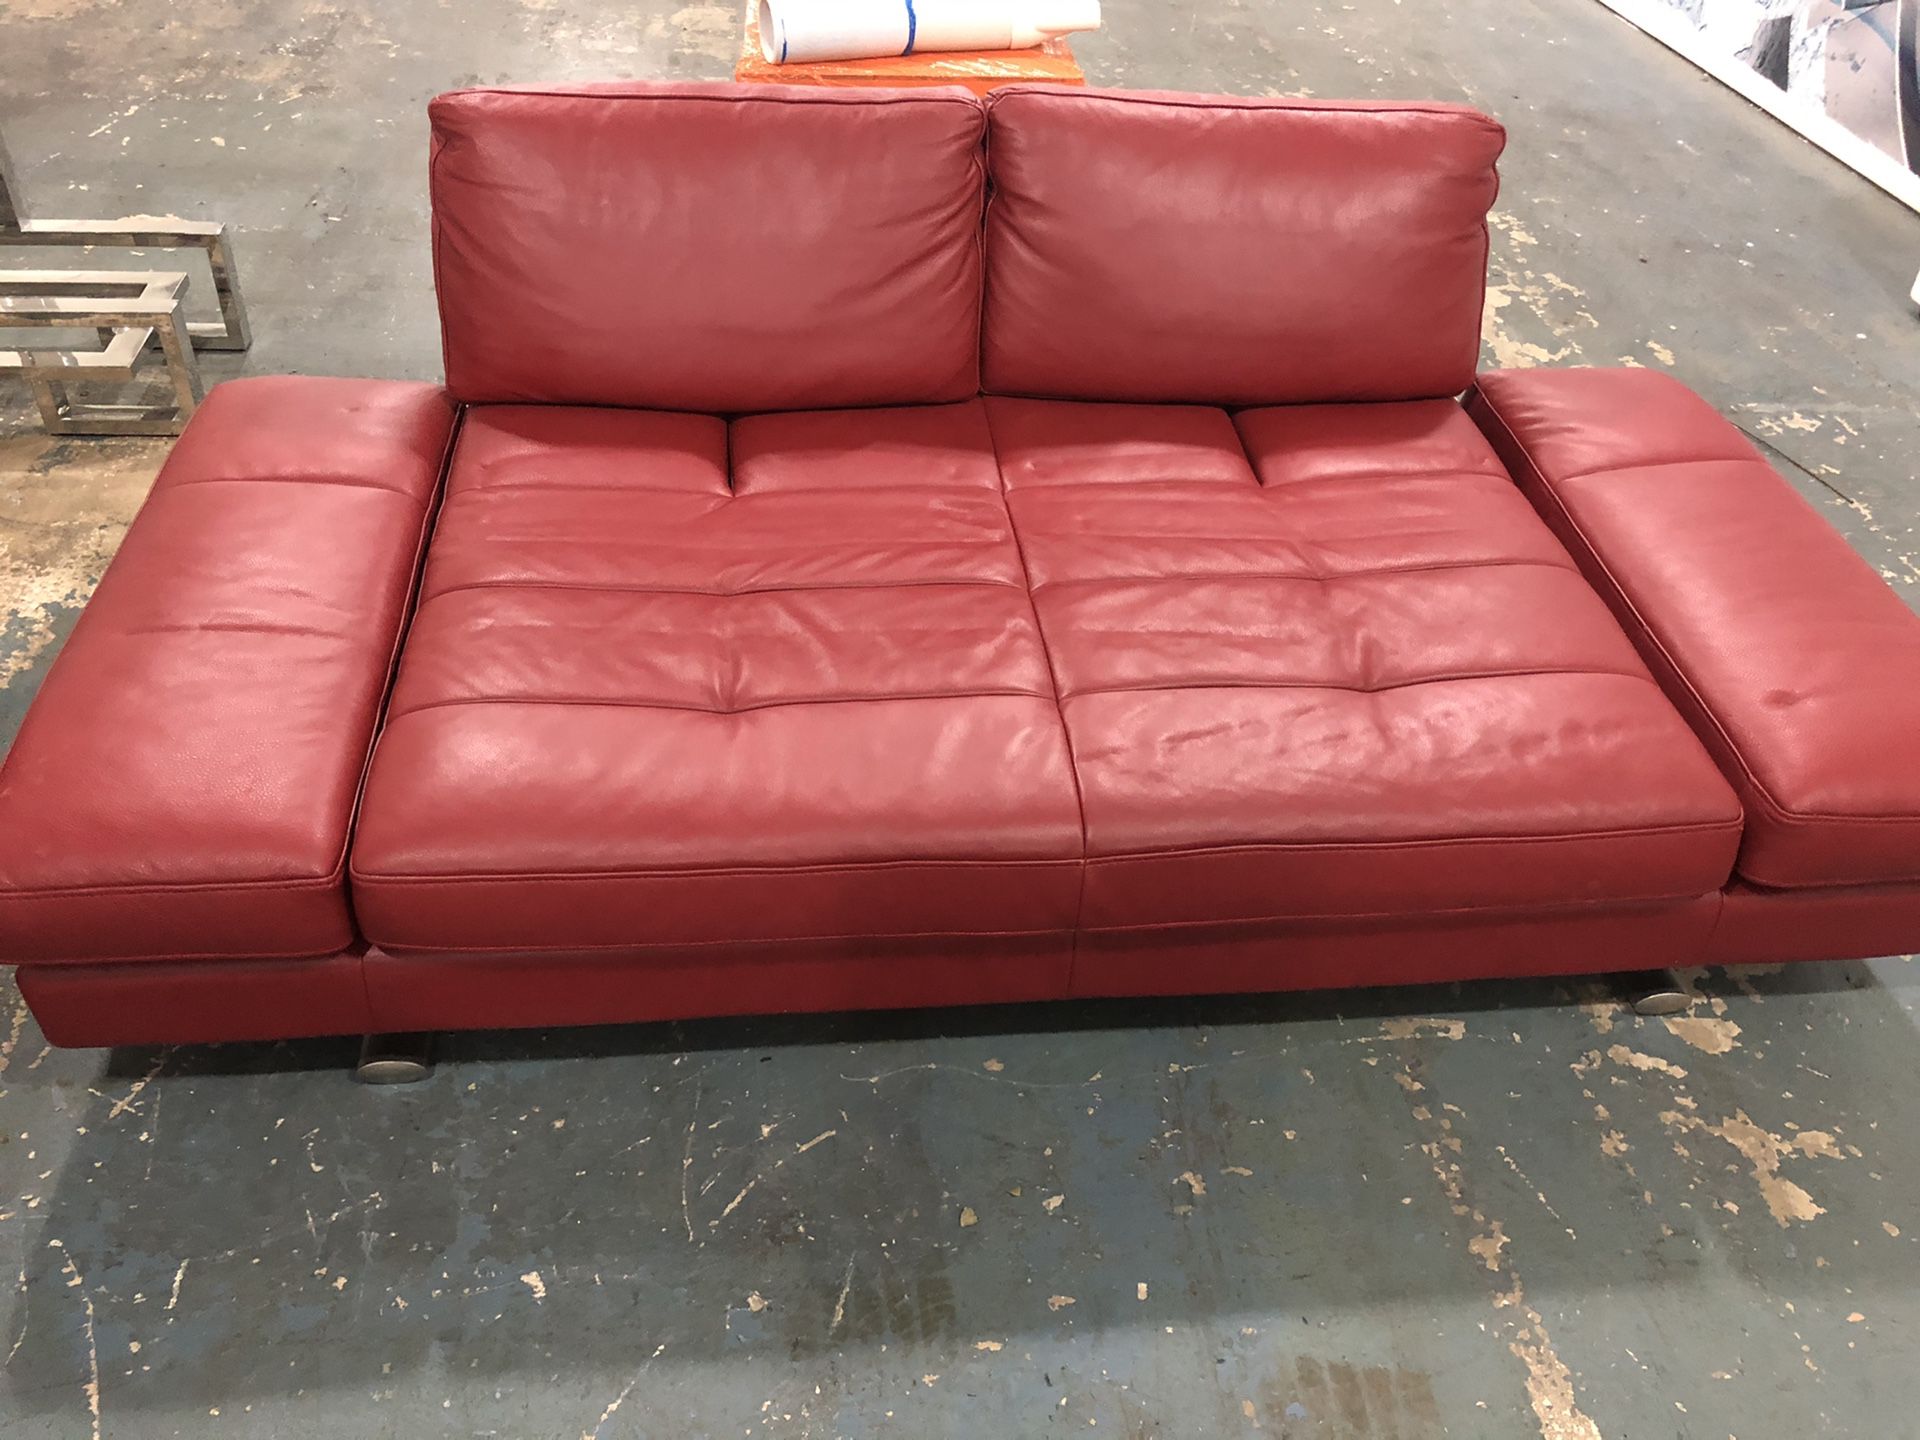 Red sofa futon